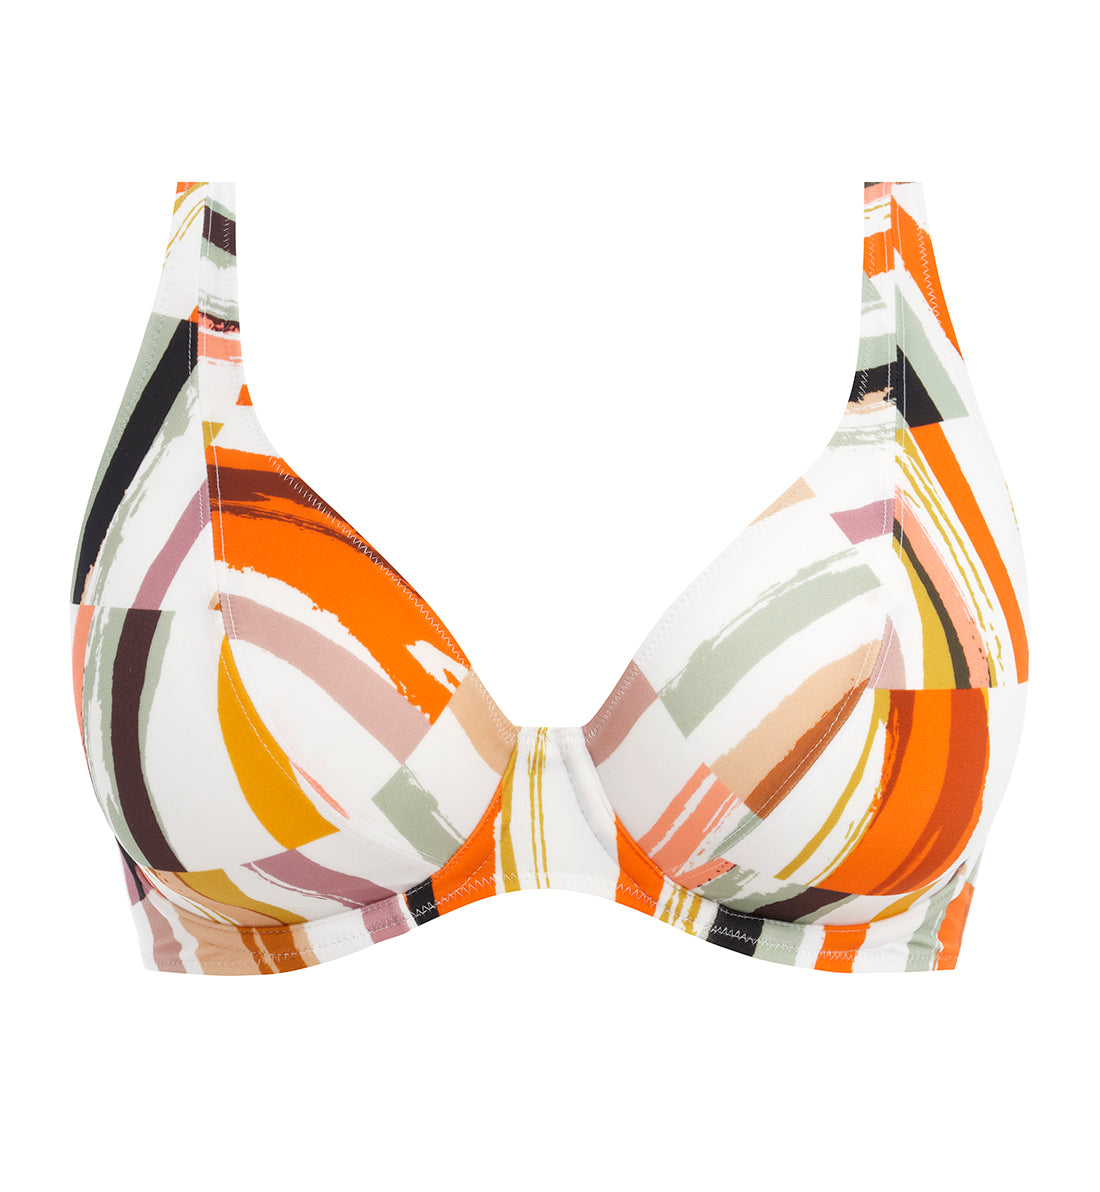 Freya Shell Island Underwire High Apex Bikini Top (202213),28E,Multi - Multi,28E